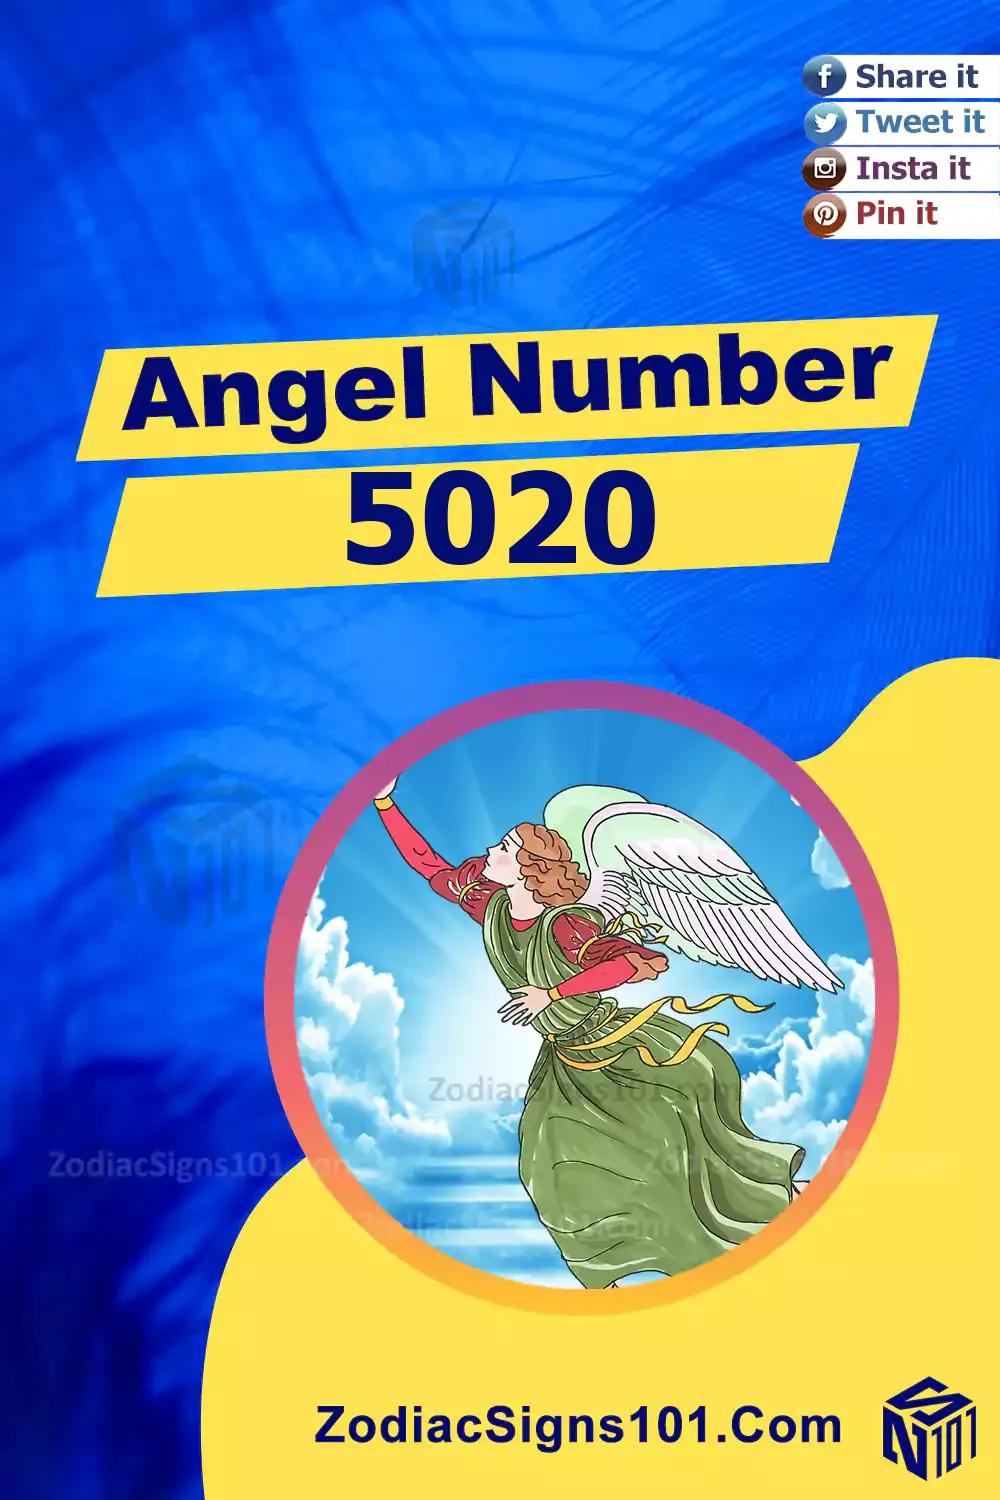 5020-Angel-Number-Meaning.jpg